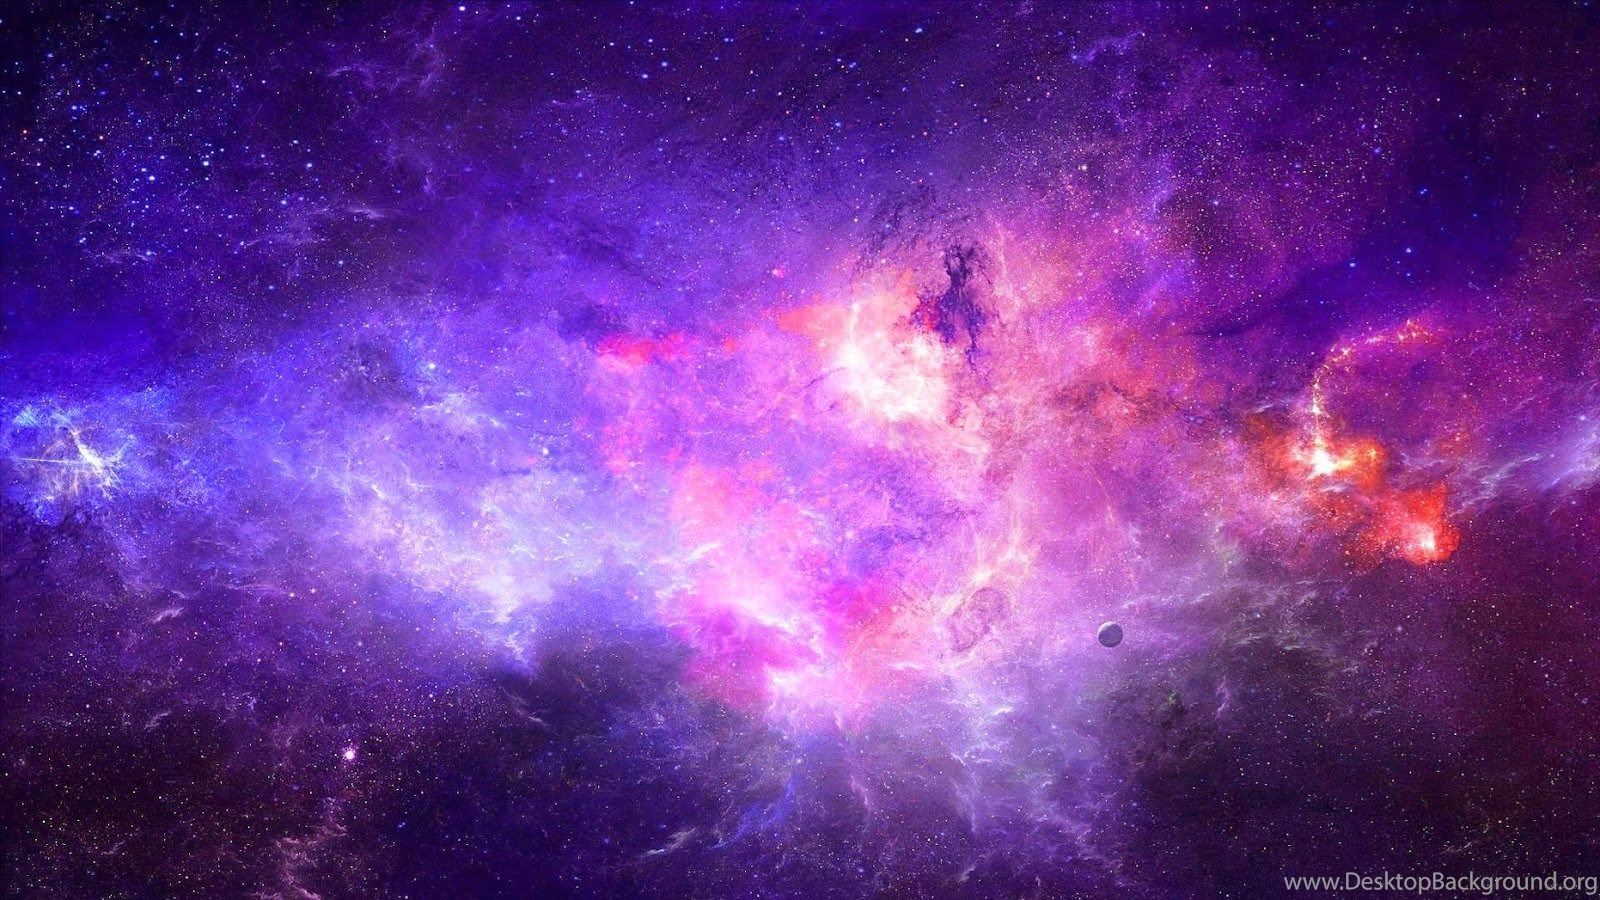 Galaxy Wallpaper Free Download: Galaxy Violet Wallpaper Desktop Background